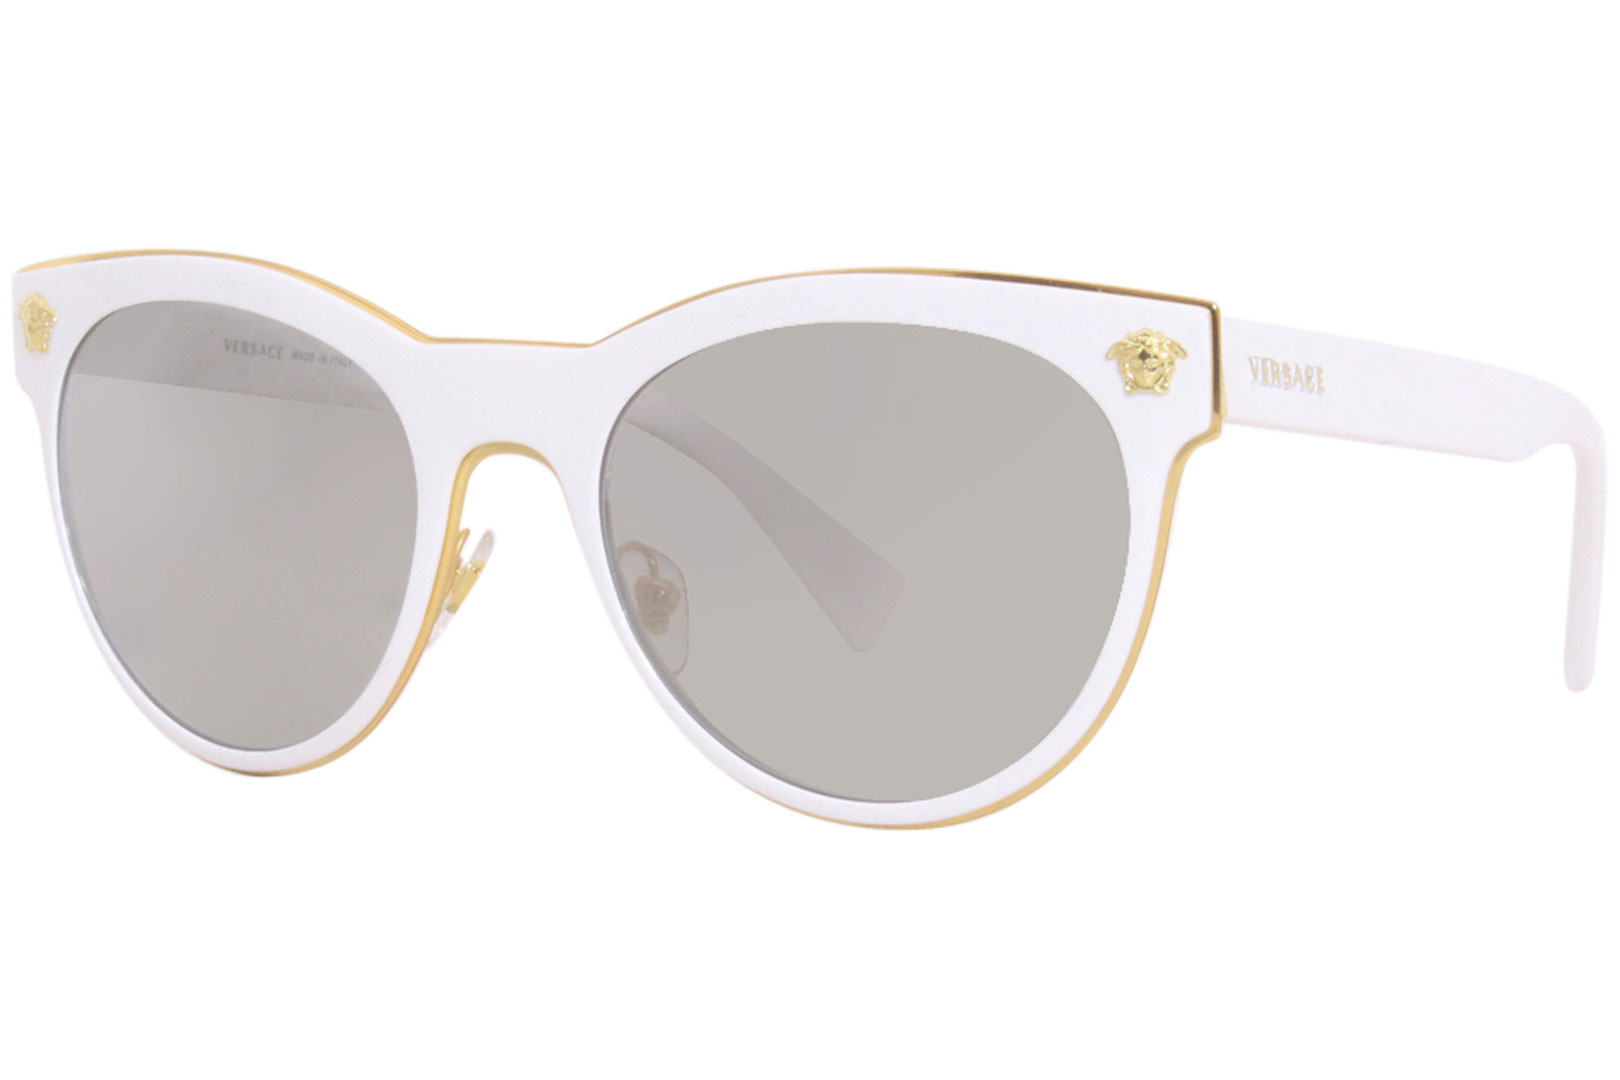 Versace Sunglasses Women's VE2198 10026G White/Light Grey-Silver Mirror ...